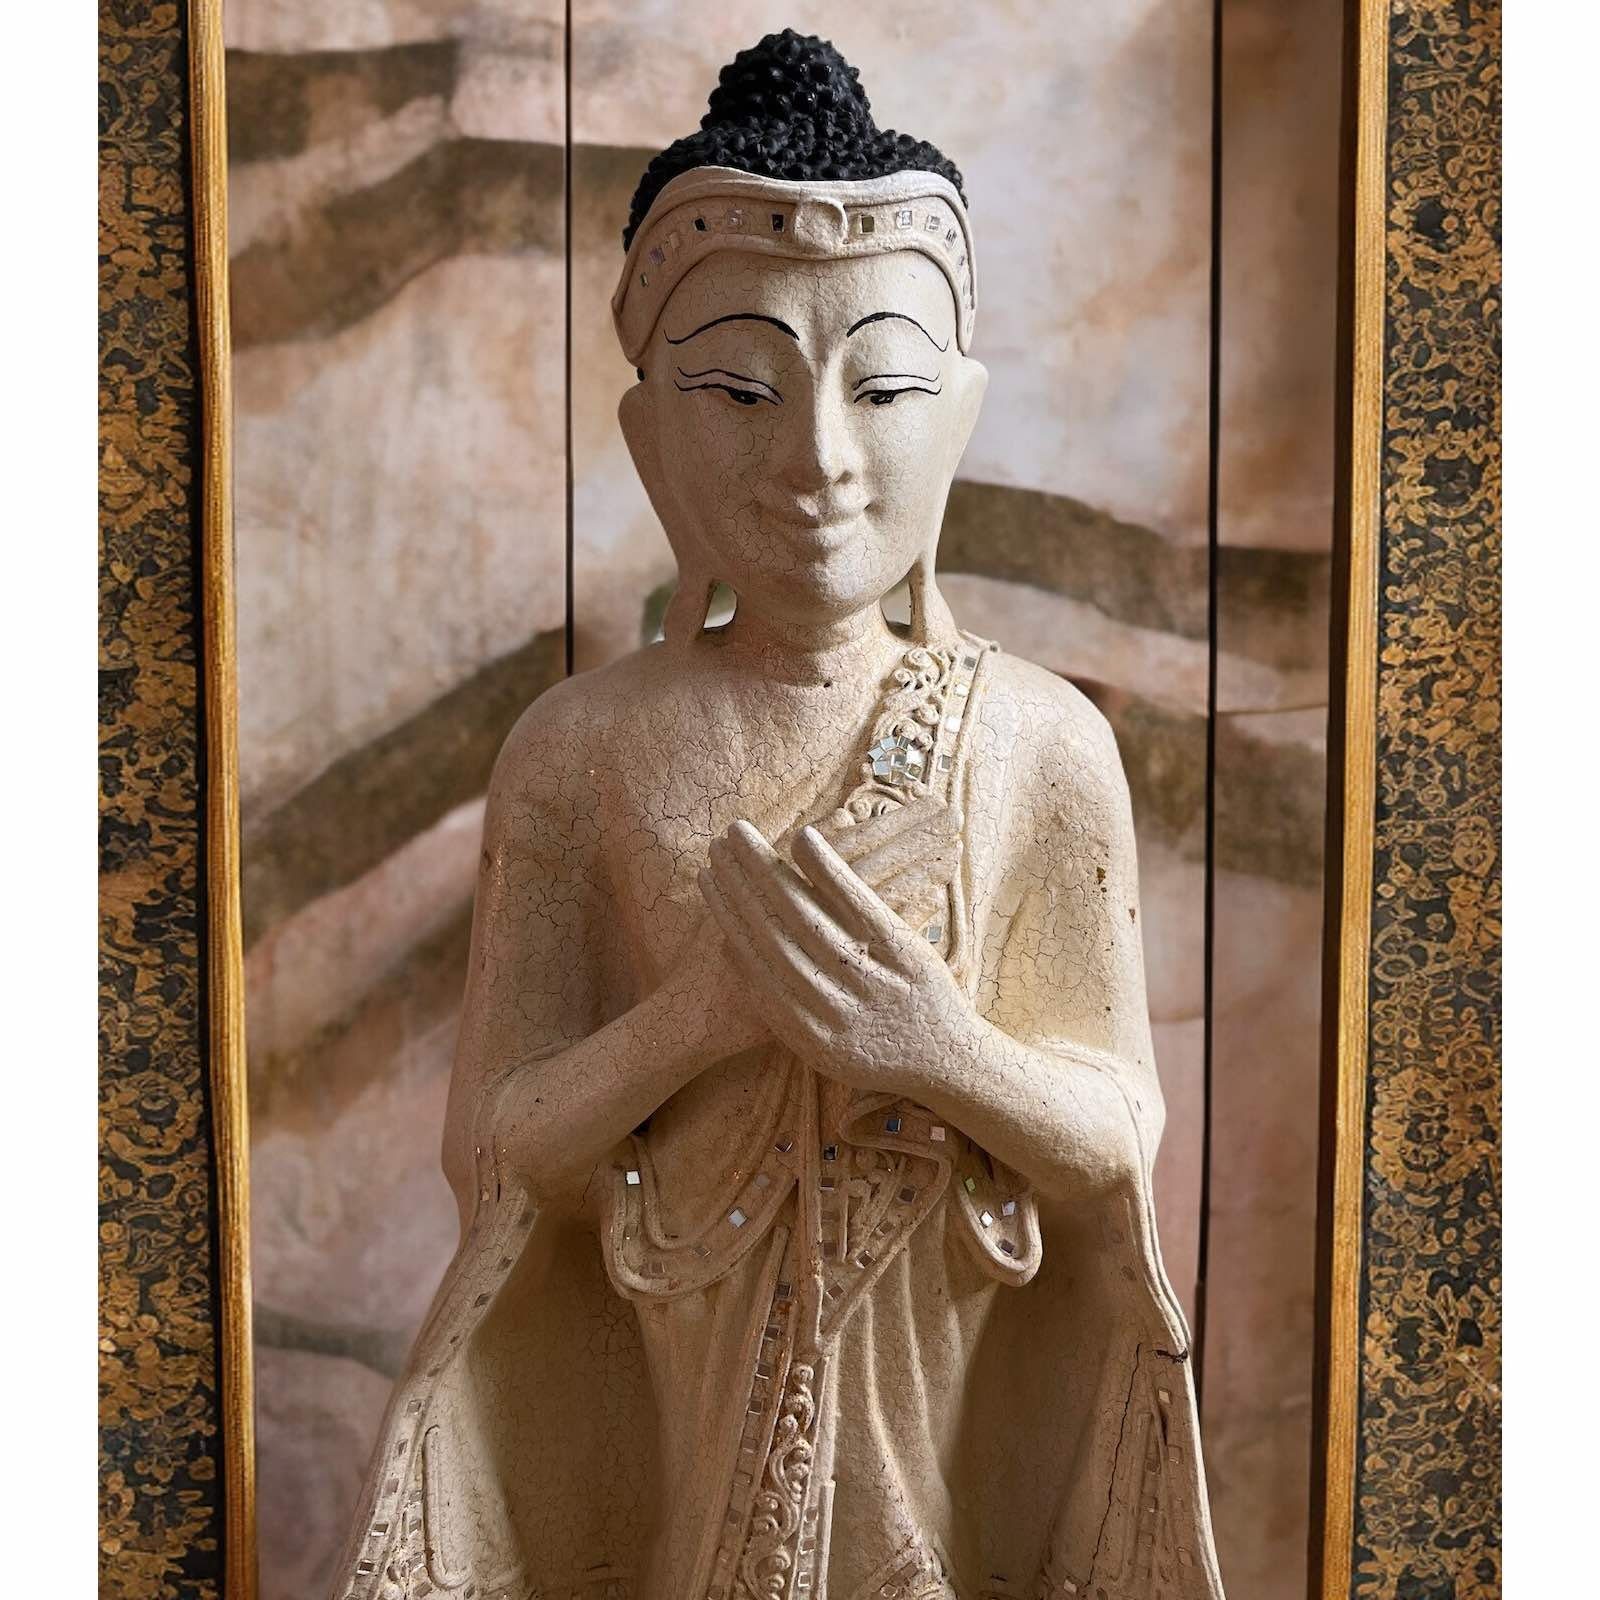 Holz LifeStyle 88cm Figur Wochentag Buddhafigur Freitag groß Buddha Asien Thailand,